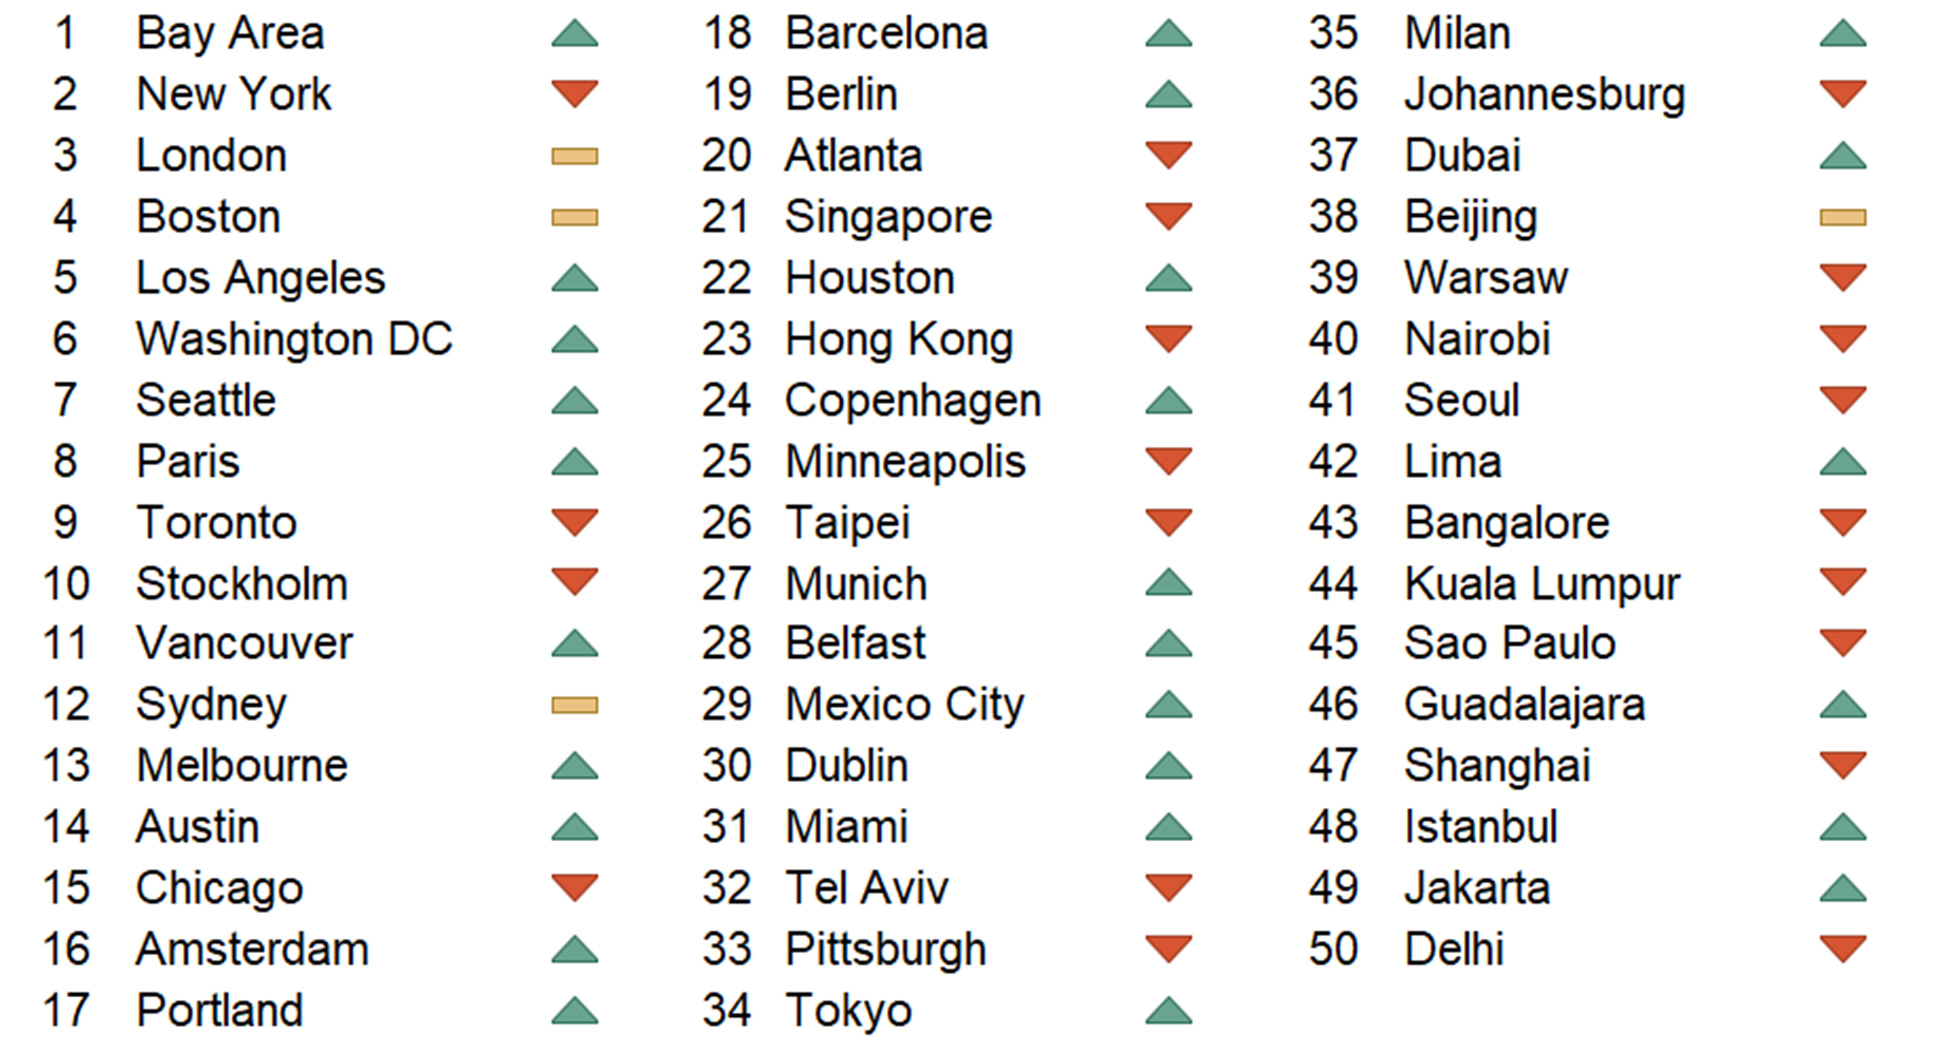 2019 WE Cities Index Rankings